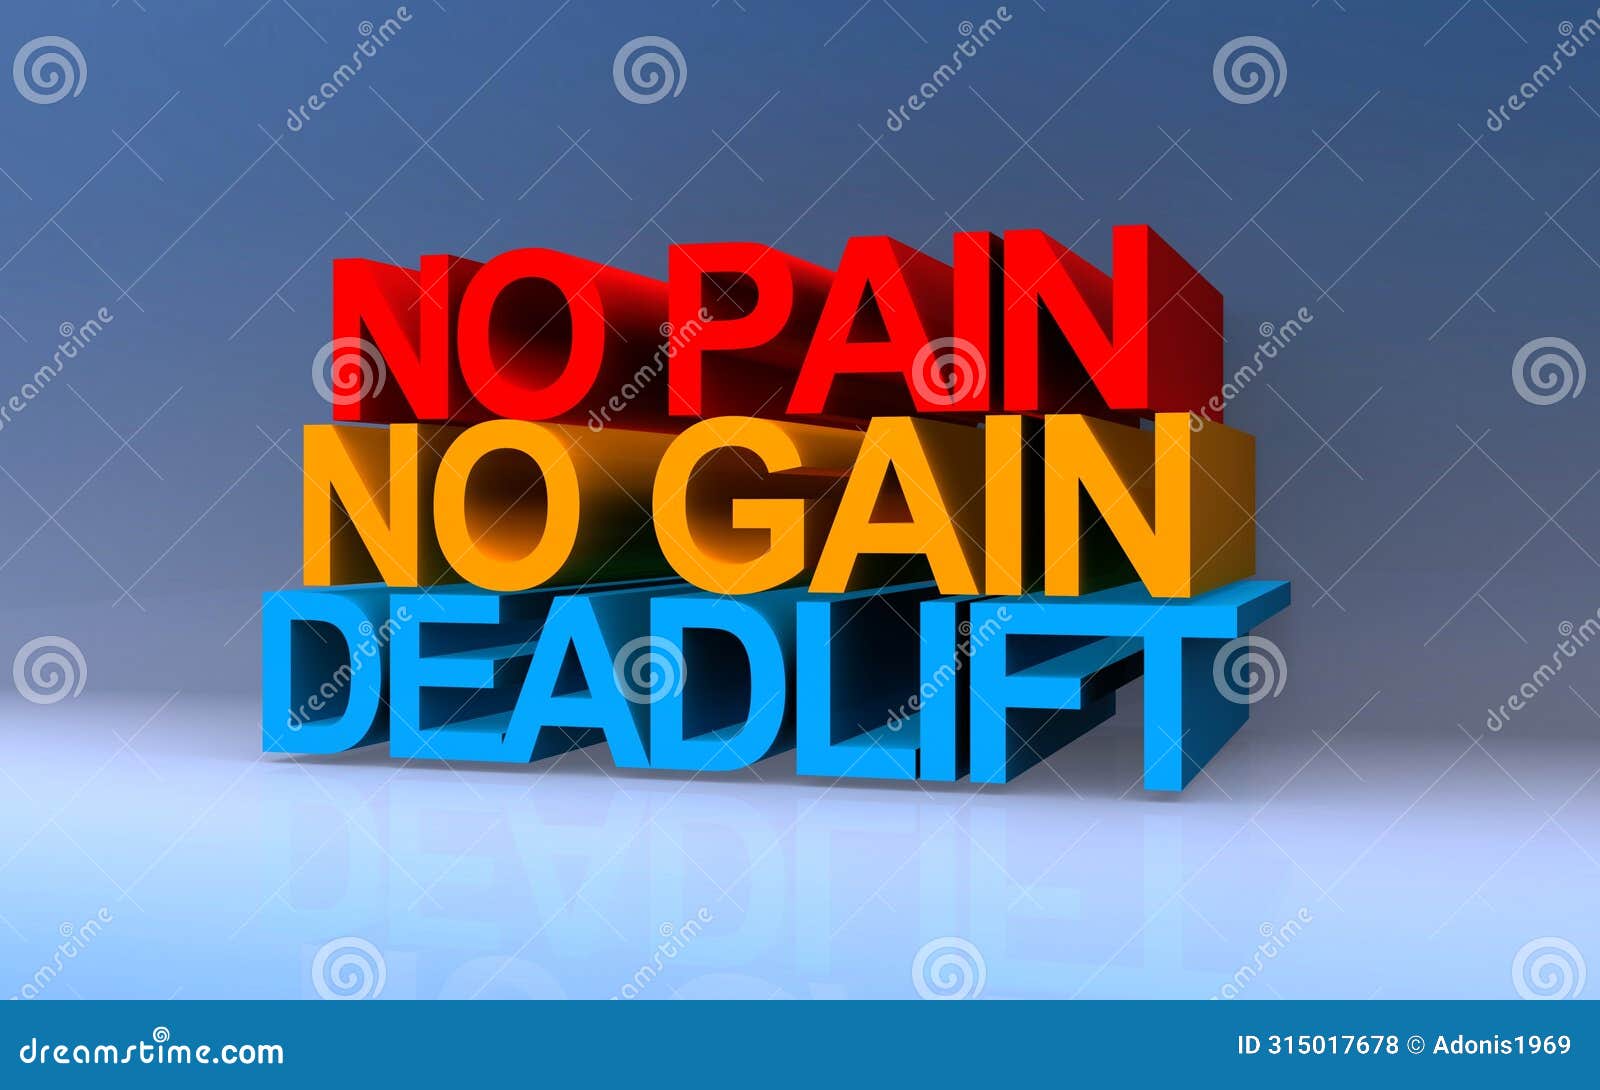 no pain no gain deadlift on blue